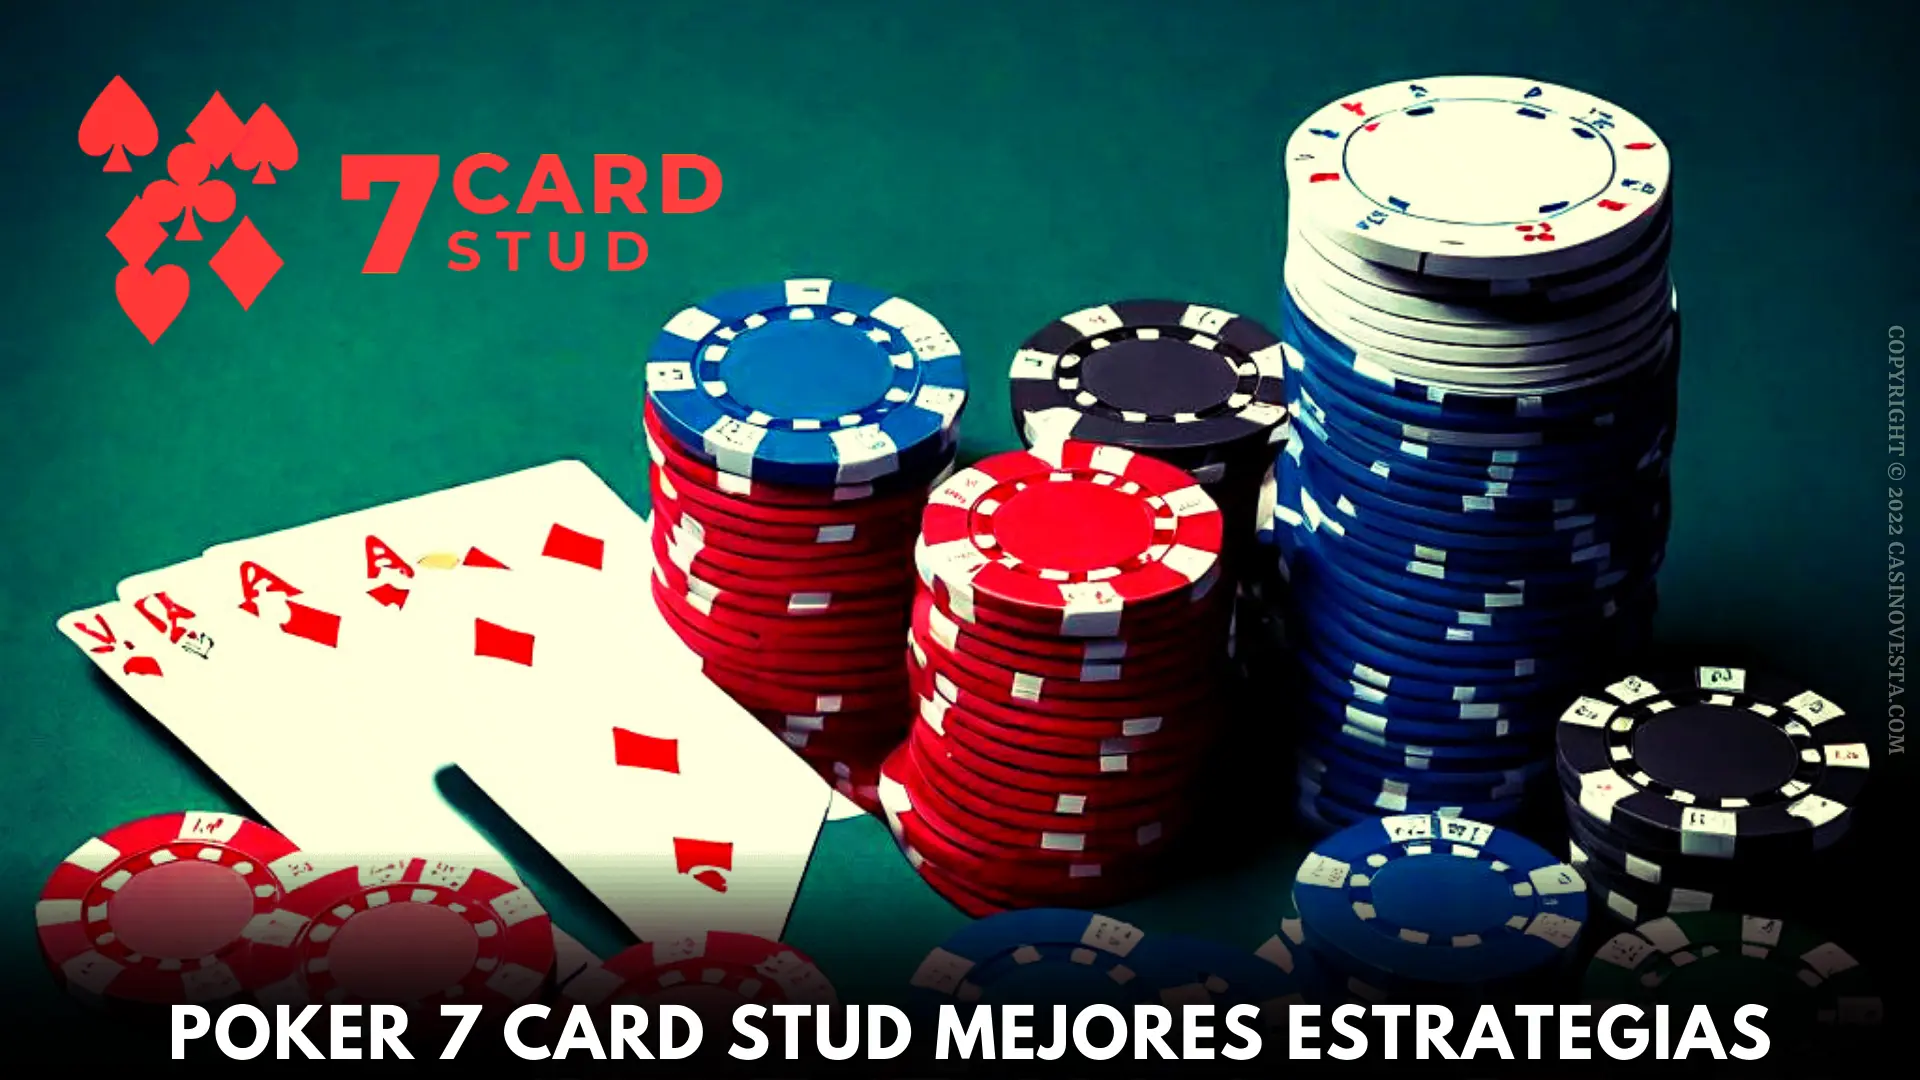 Las mejores estrategias del Seven Card Stud Poker que funcionan